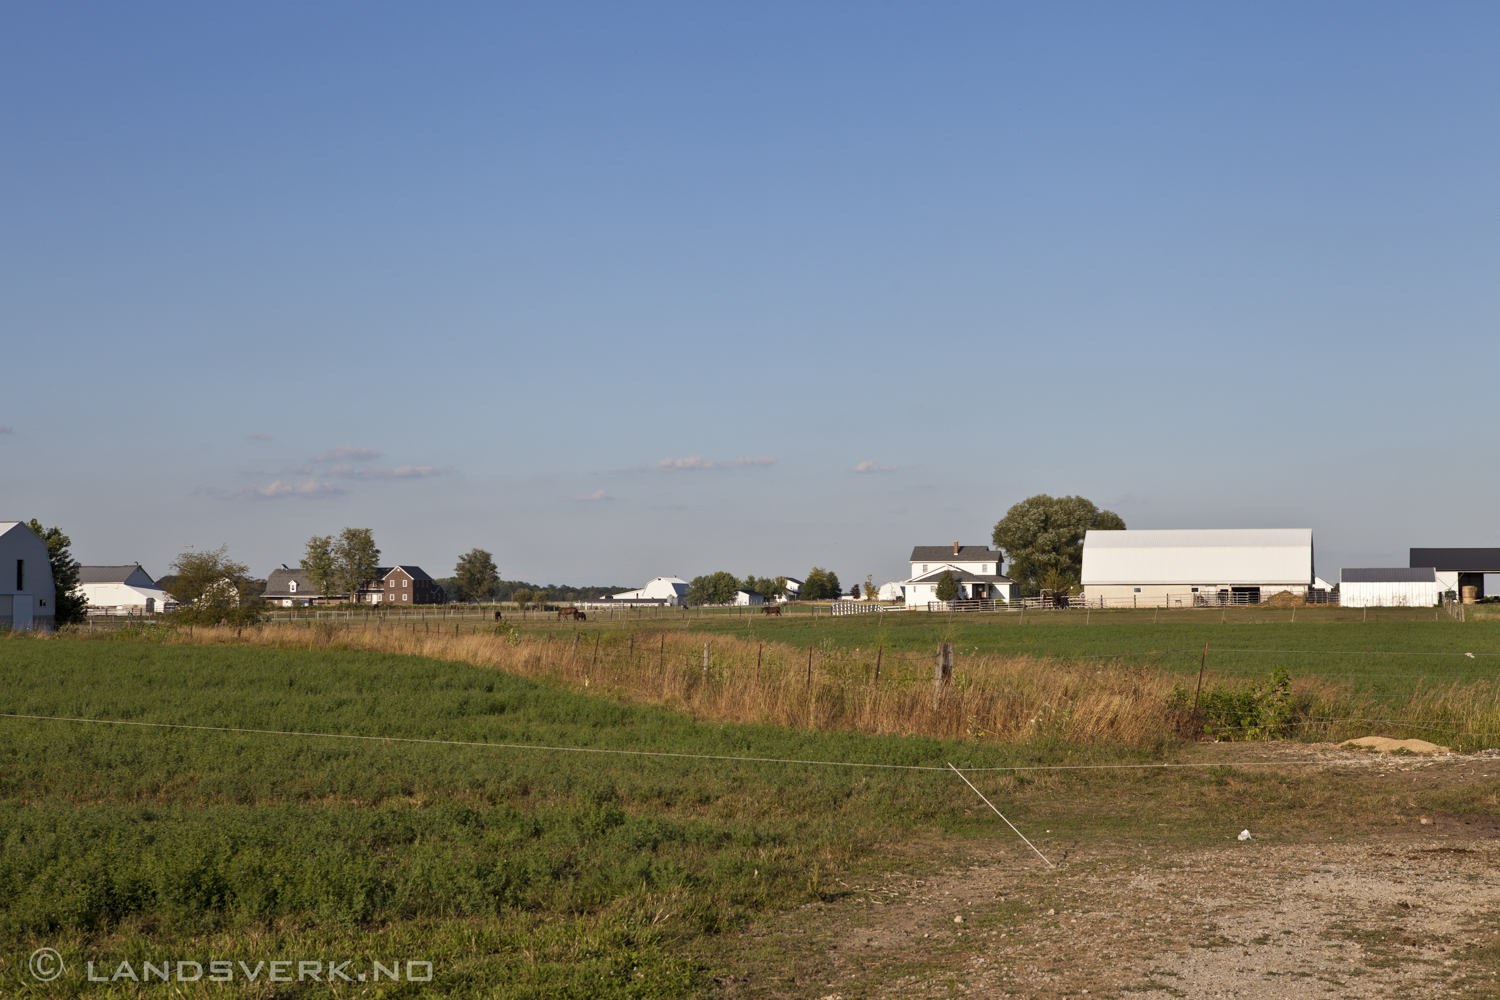 Amish farm, Indiana. 

(Canon EOS 5D Mark II / Canon EF 24-70mm f/2.8 L USM)